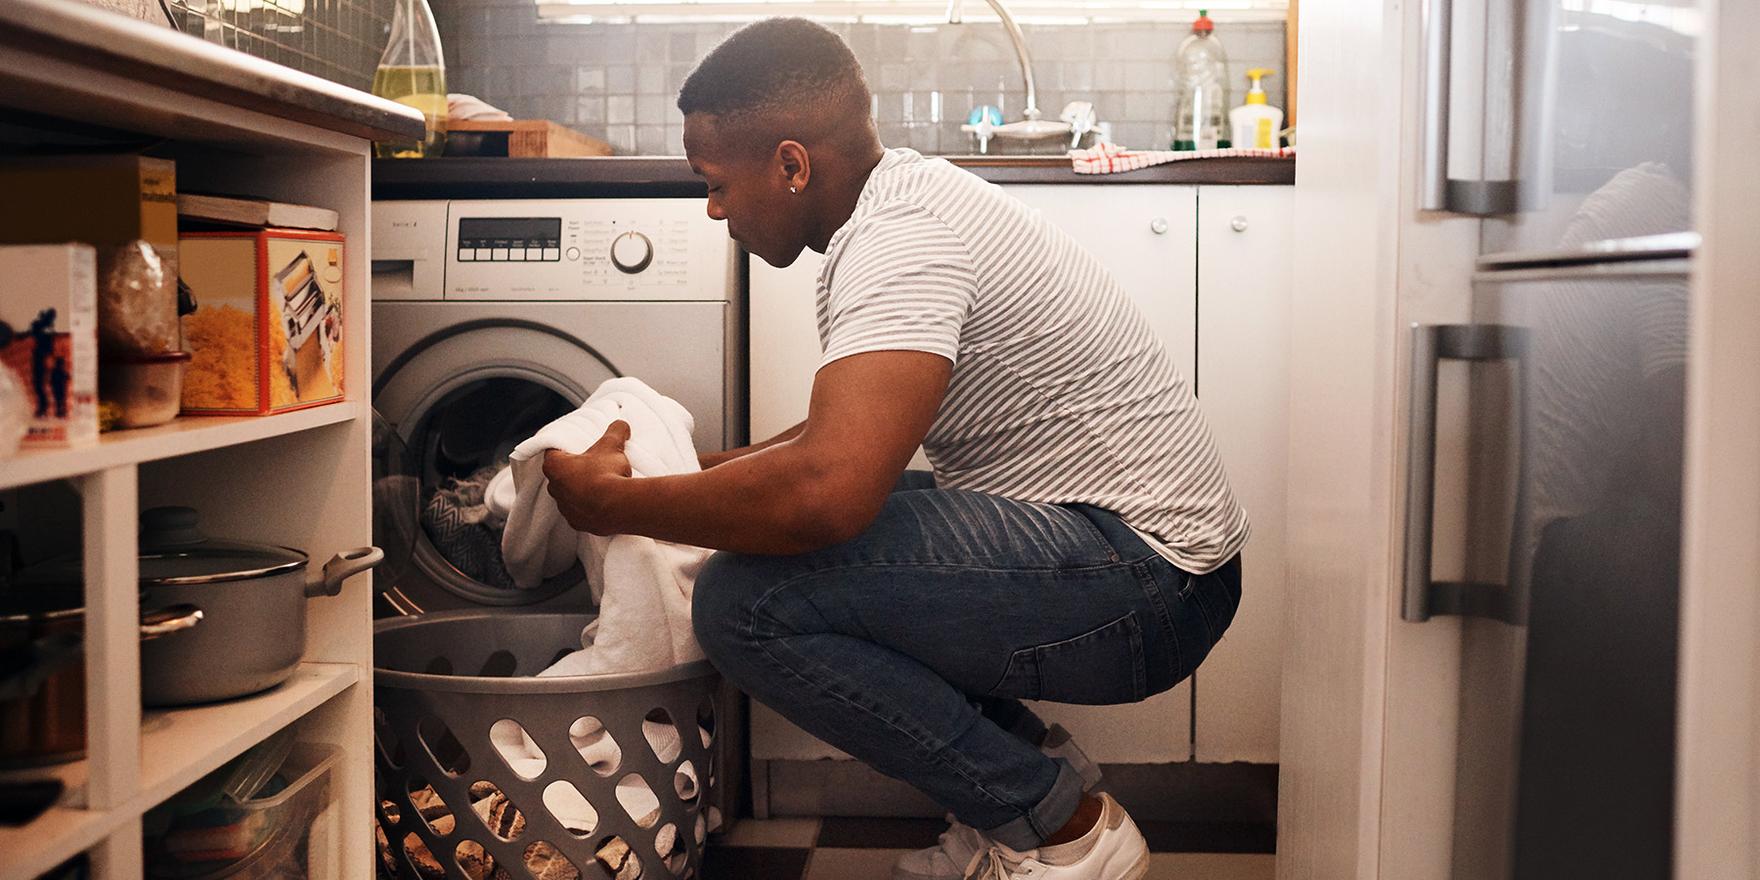 Person kneeling next to laundry machine